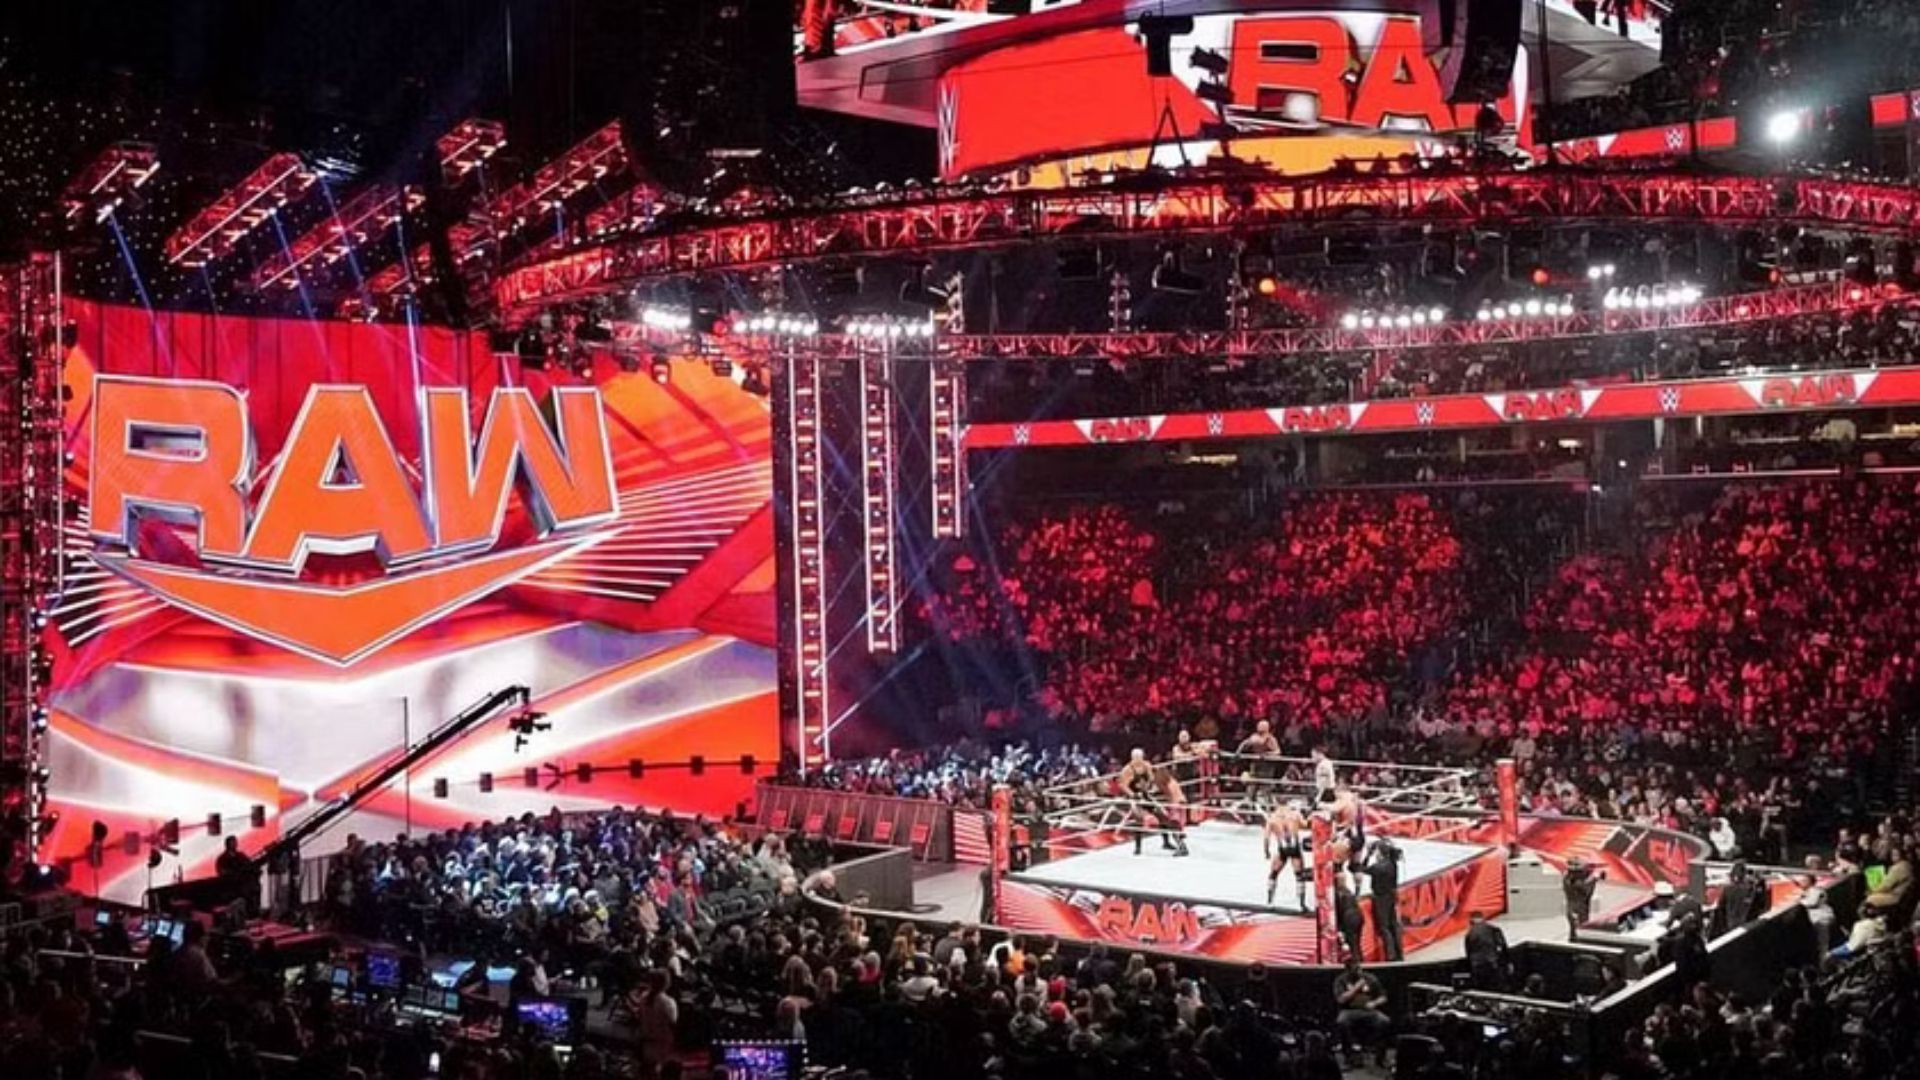 WWE RAW Arena image. Credits: X